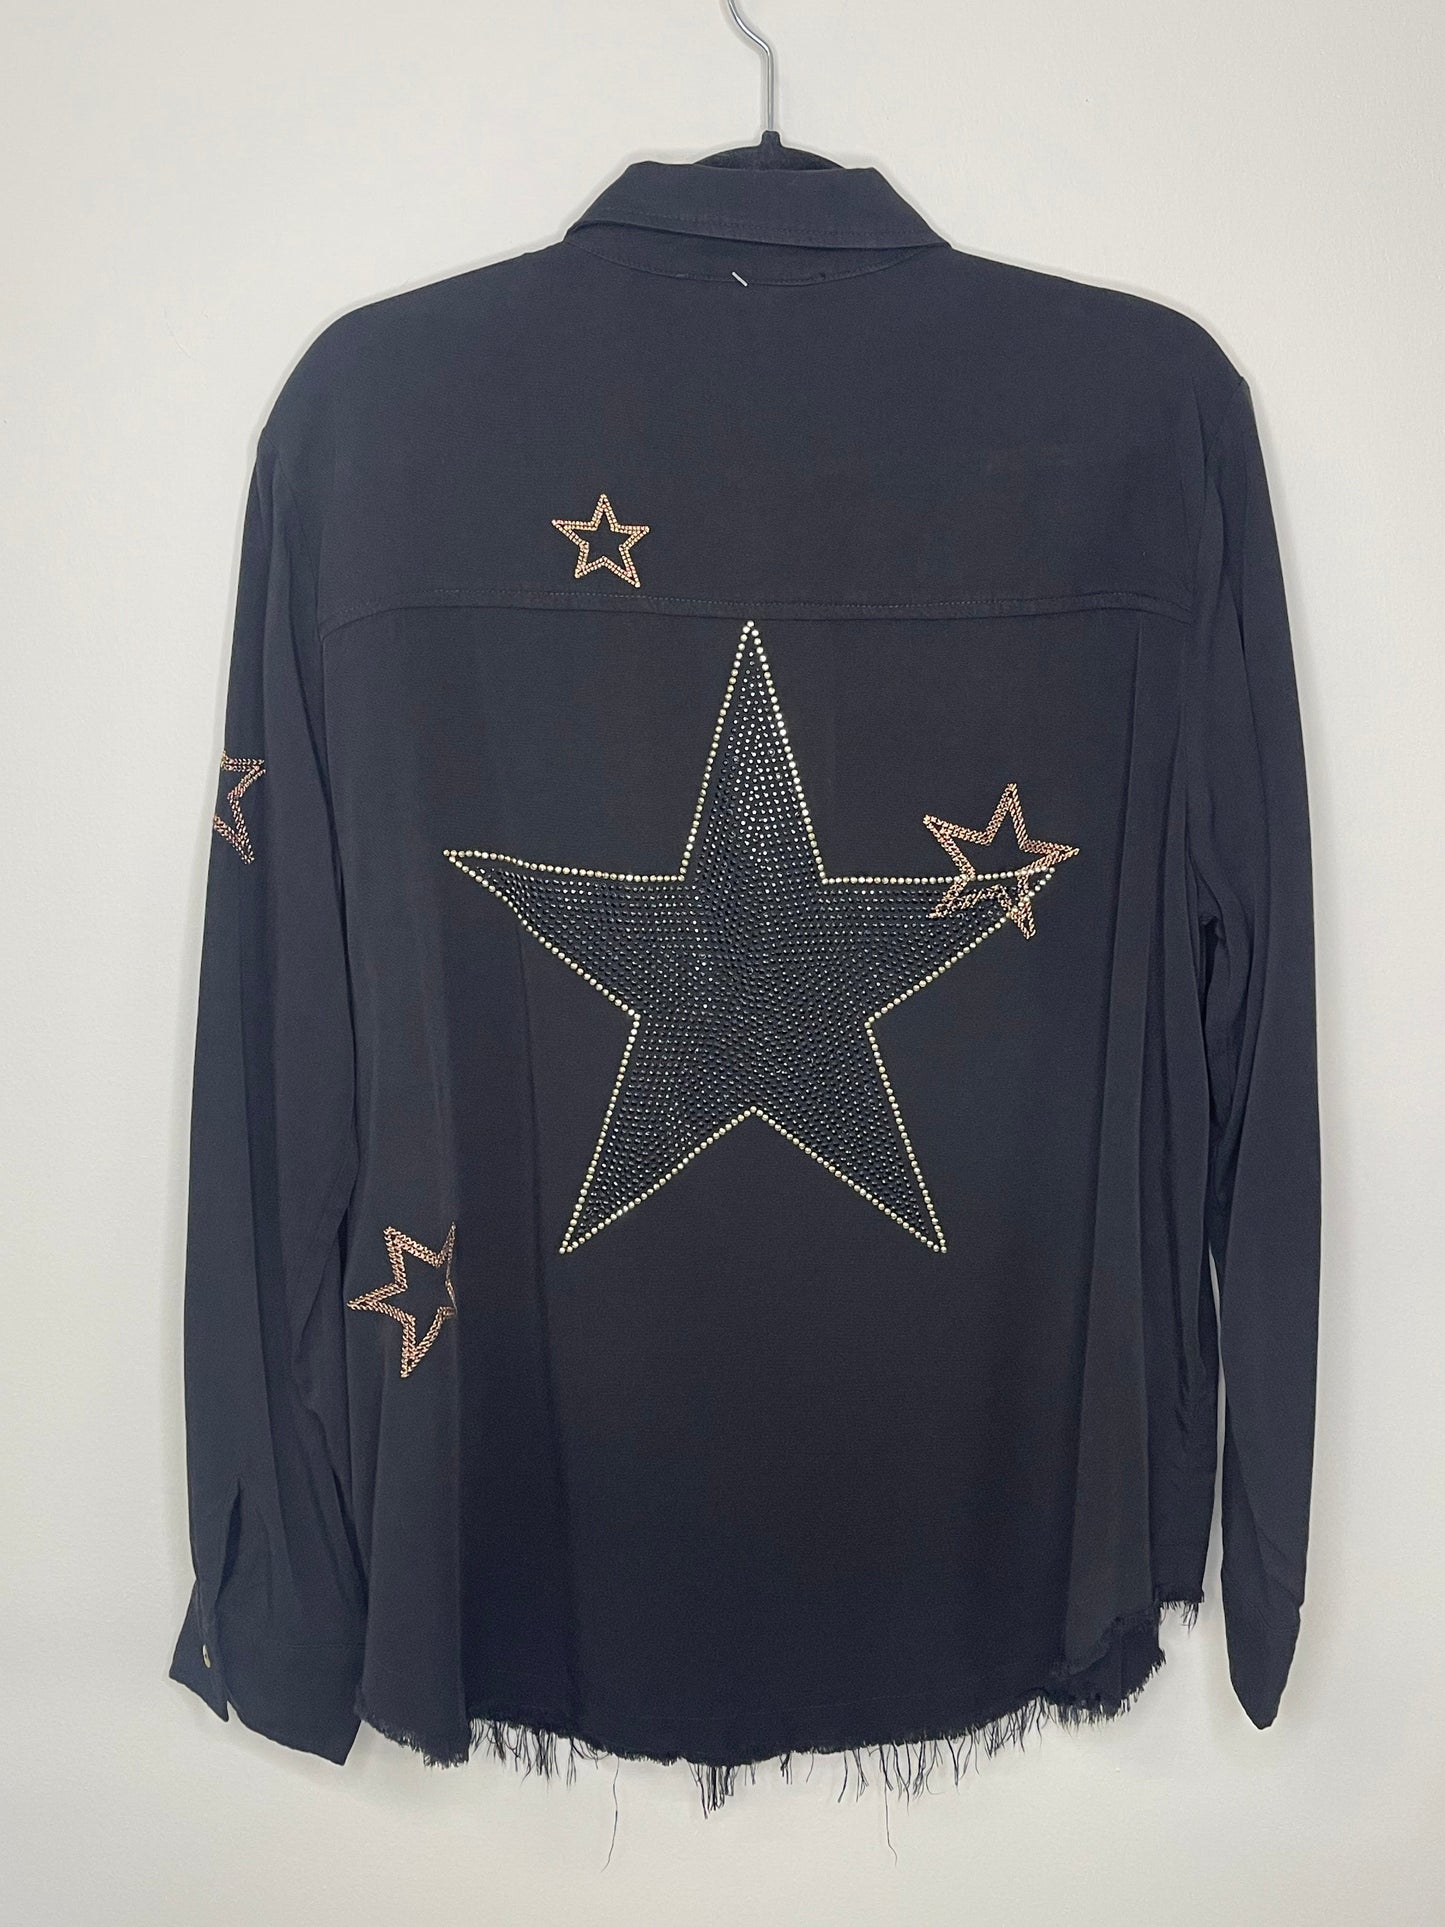 Shirt, Embroidered Star Black, Black/Gold Star